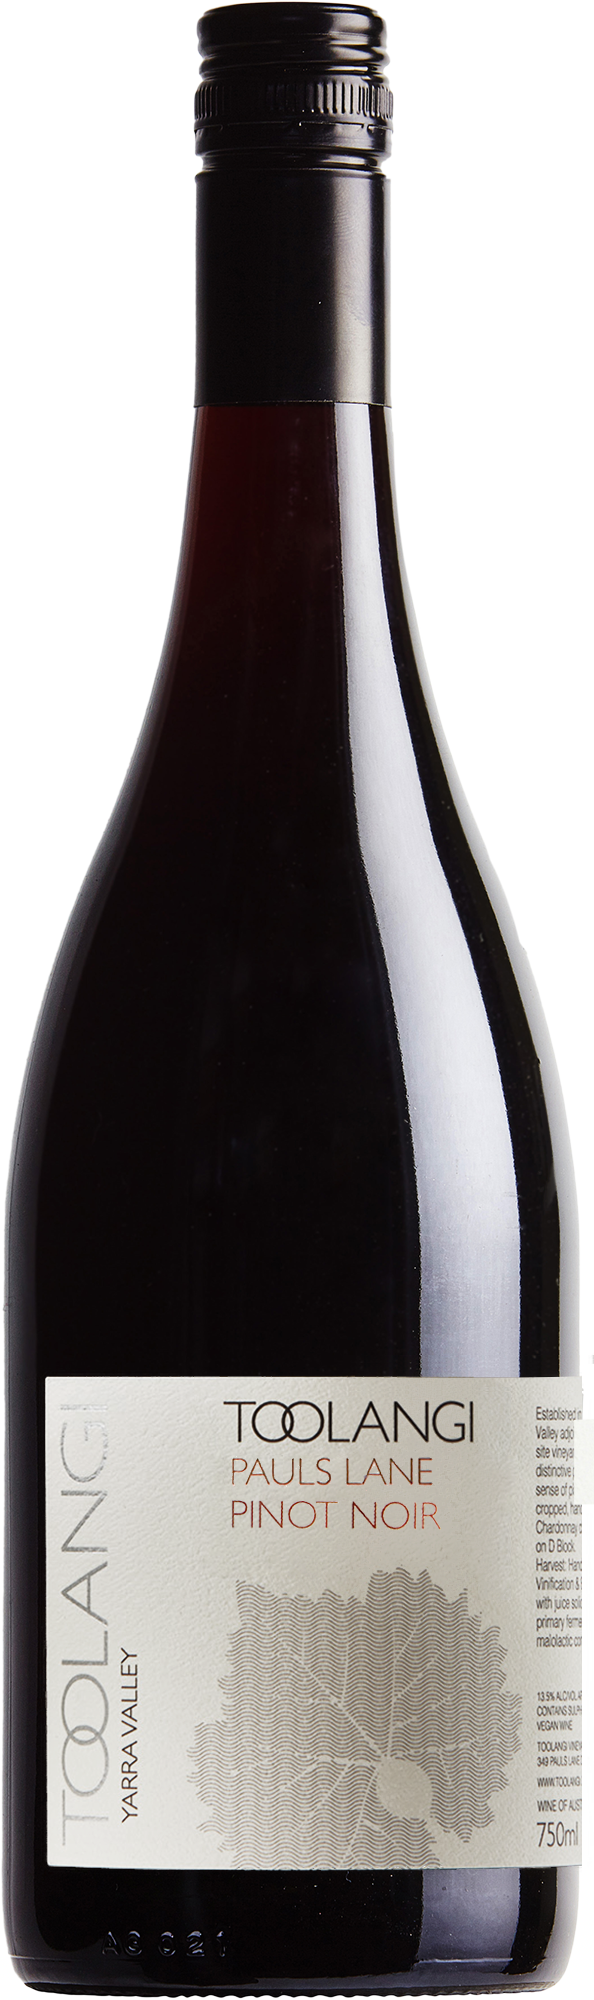 Toolangi Pauls Lane Pinot Noir 2020